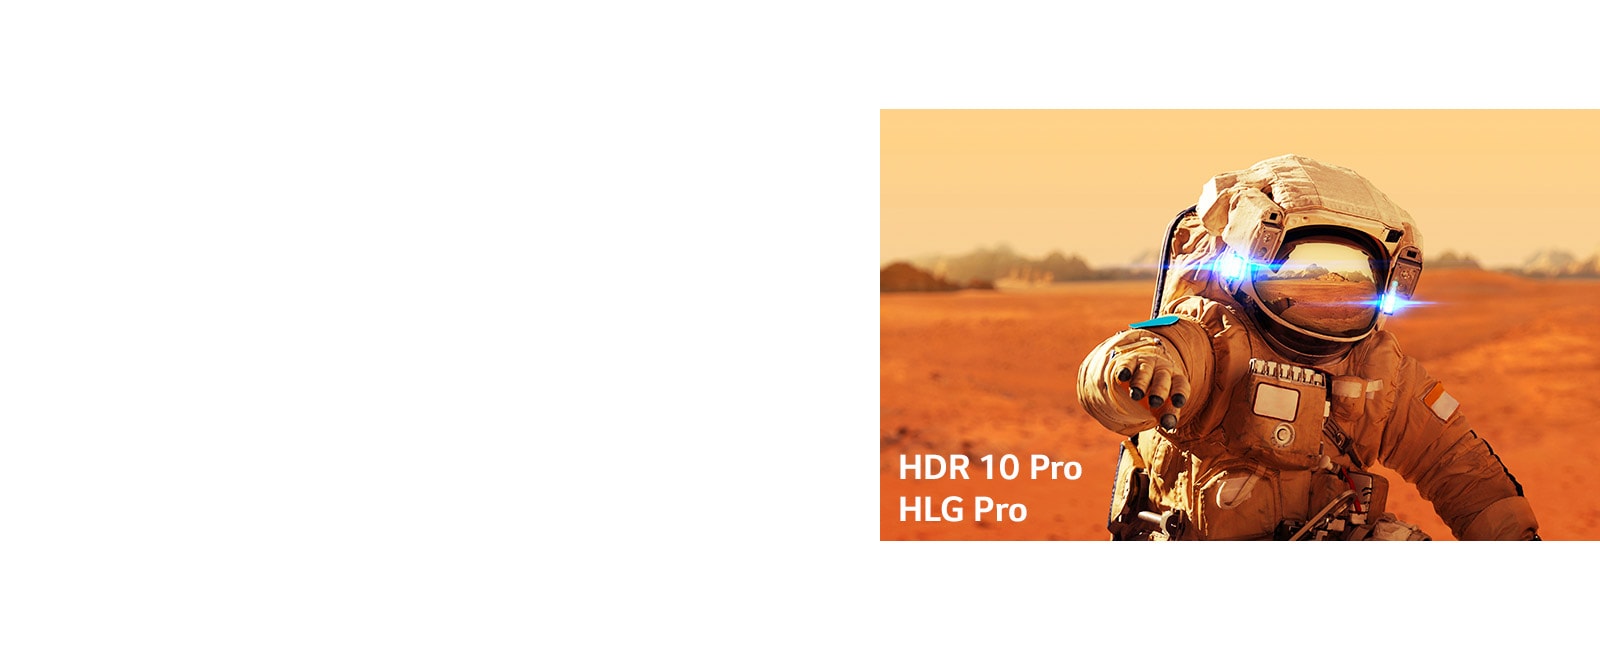 Marvel Iron Man ، بطاقات العنوان مع شعارات HLG pro و HDR 10 Pro